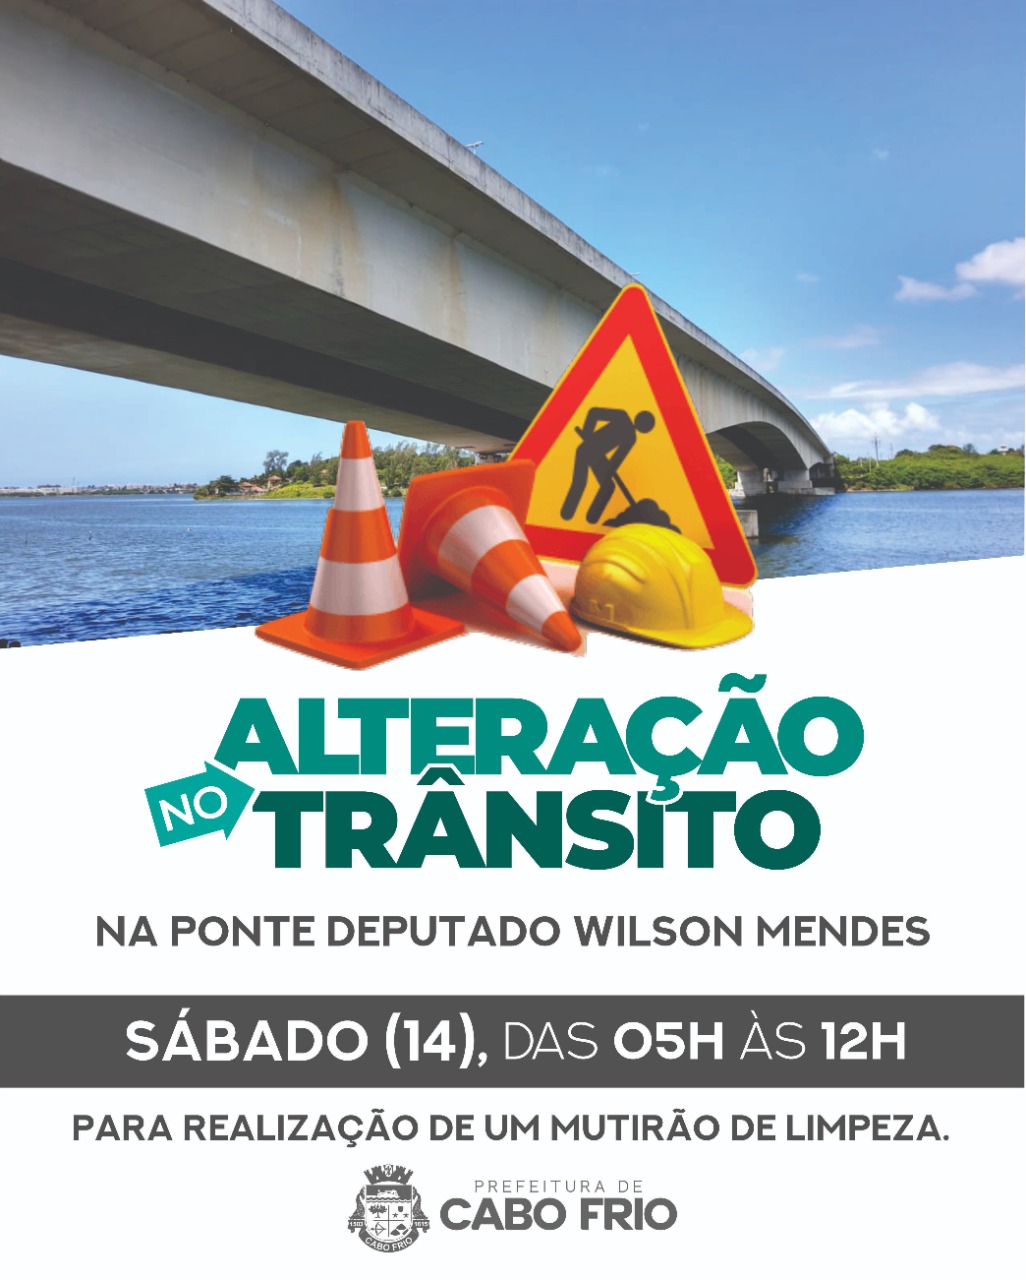 Prefeitura realiza limpeza da Ponte Deputado Wilson Mendes, no sábado (14)